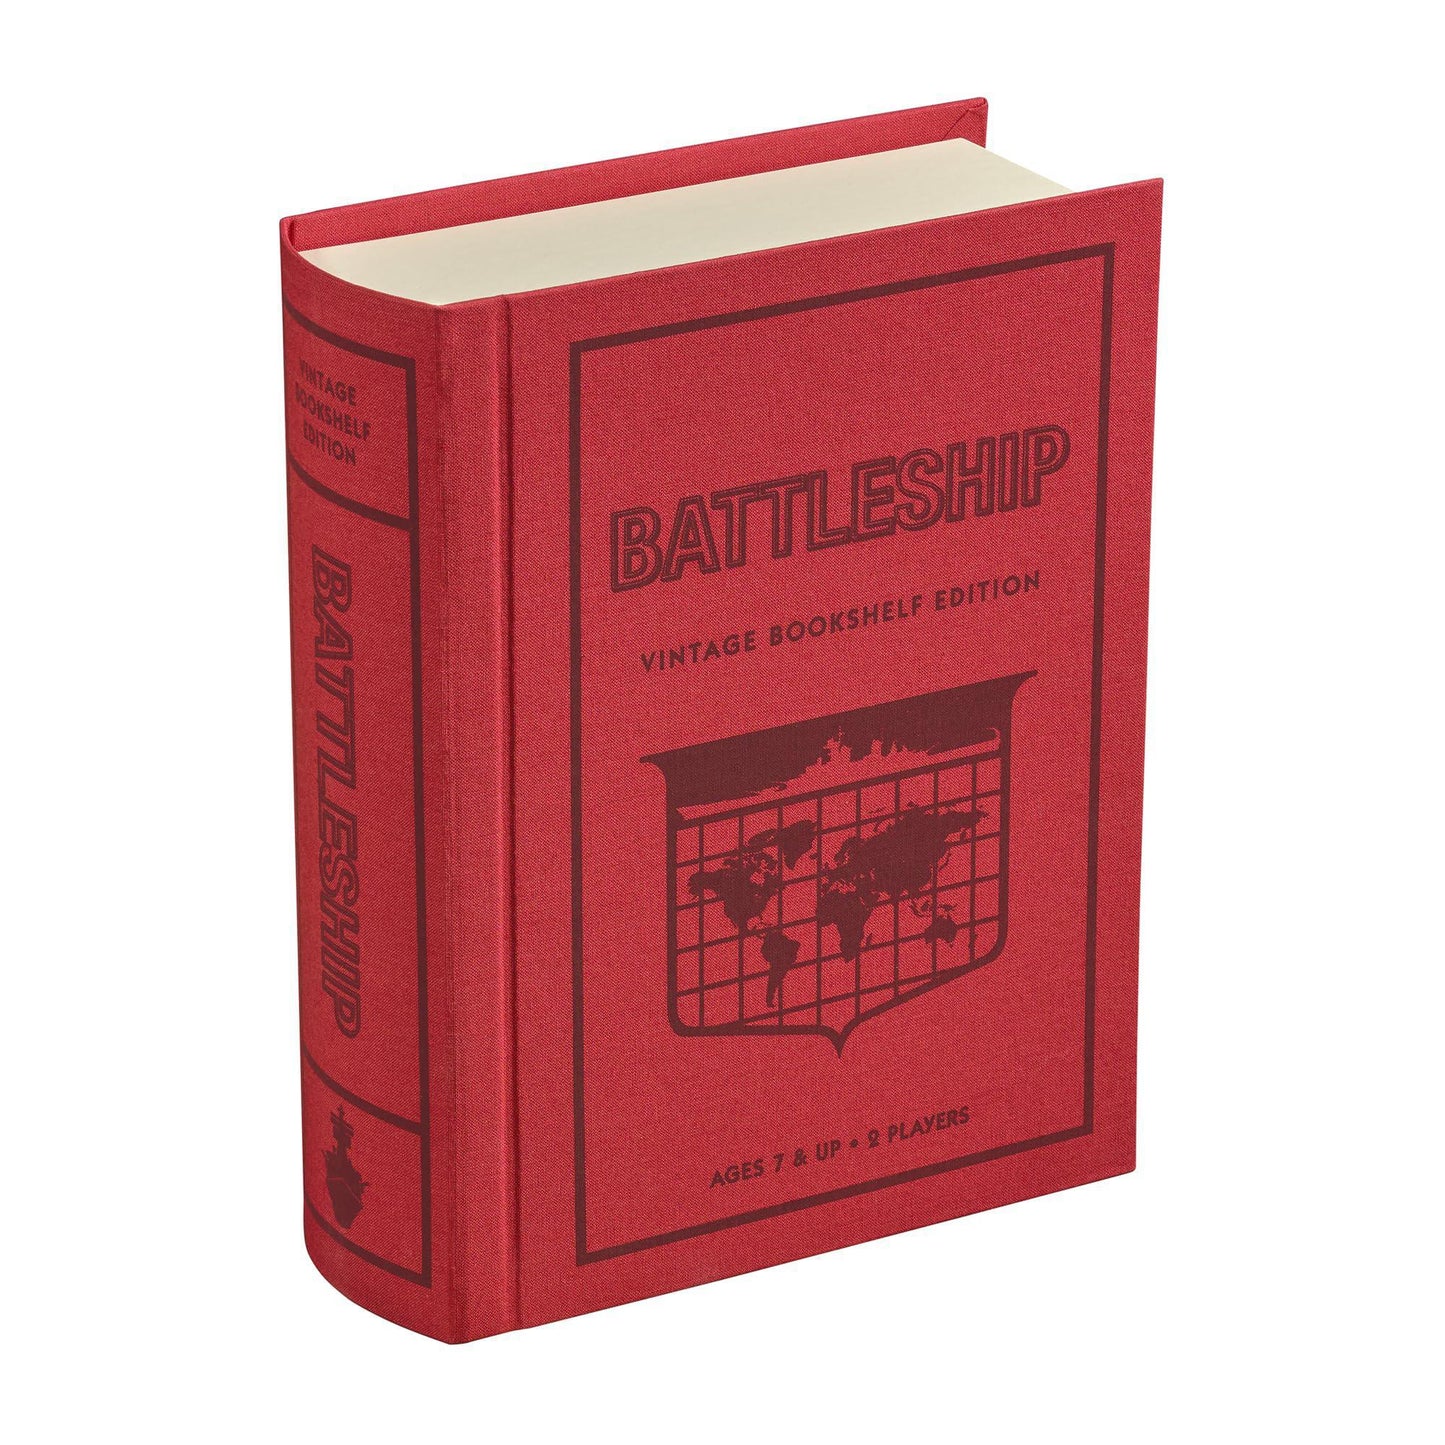 WS Game Company - 'Battleship' Vintage Bookshelf Edition